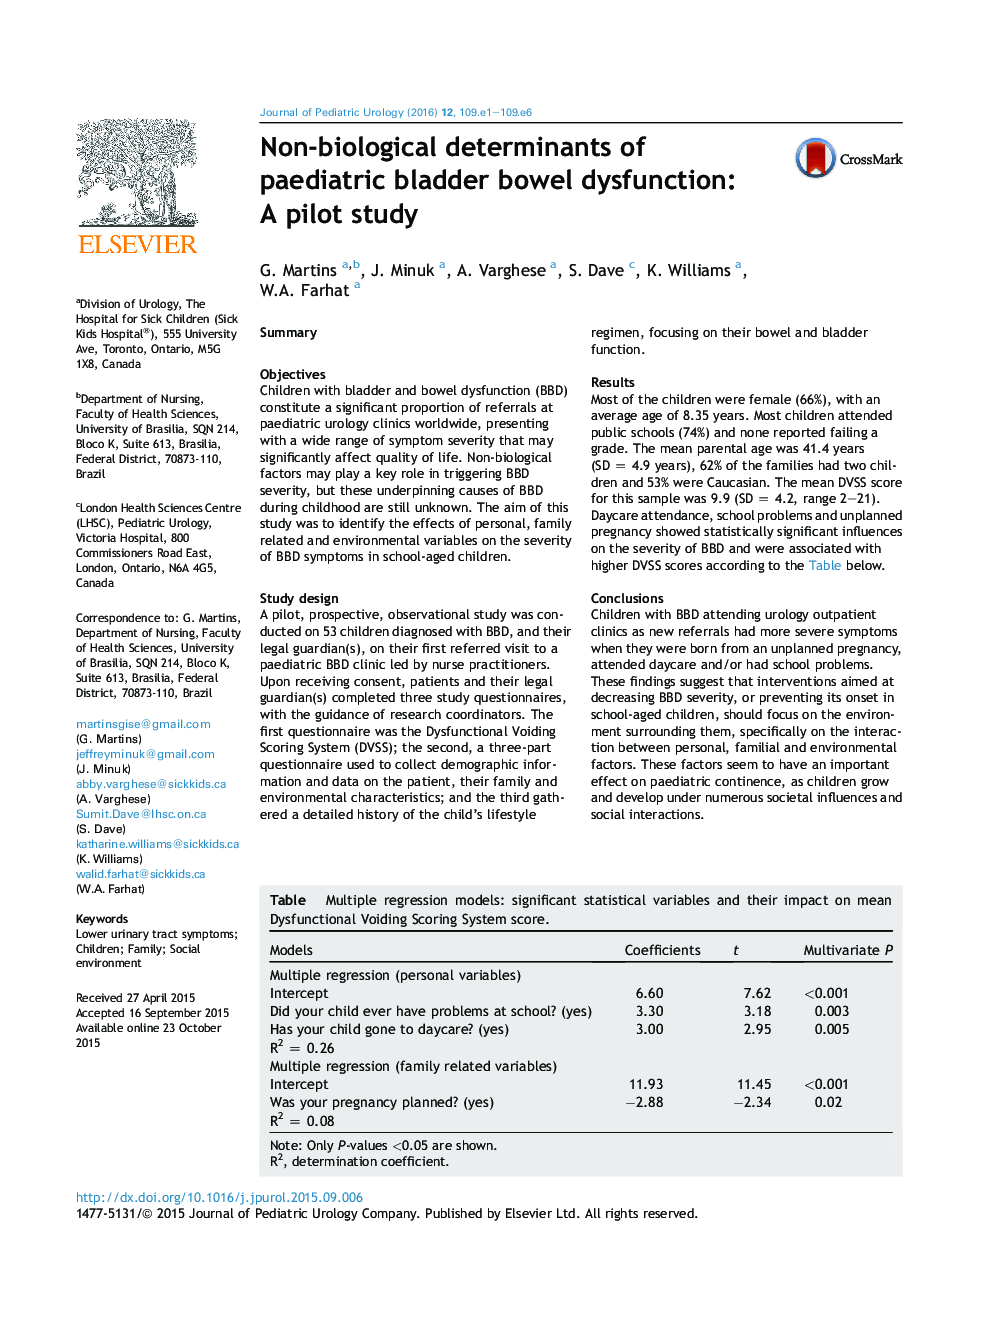 Non-biological determinants of paediatric bladder bowel dysfunction: AÂ pilot study